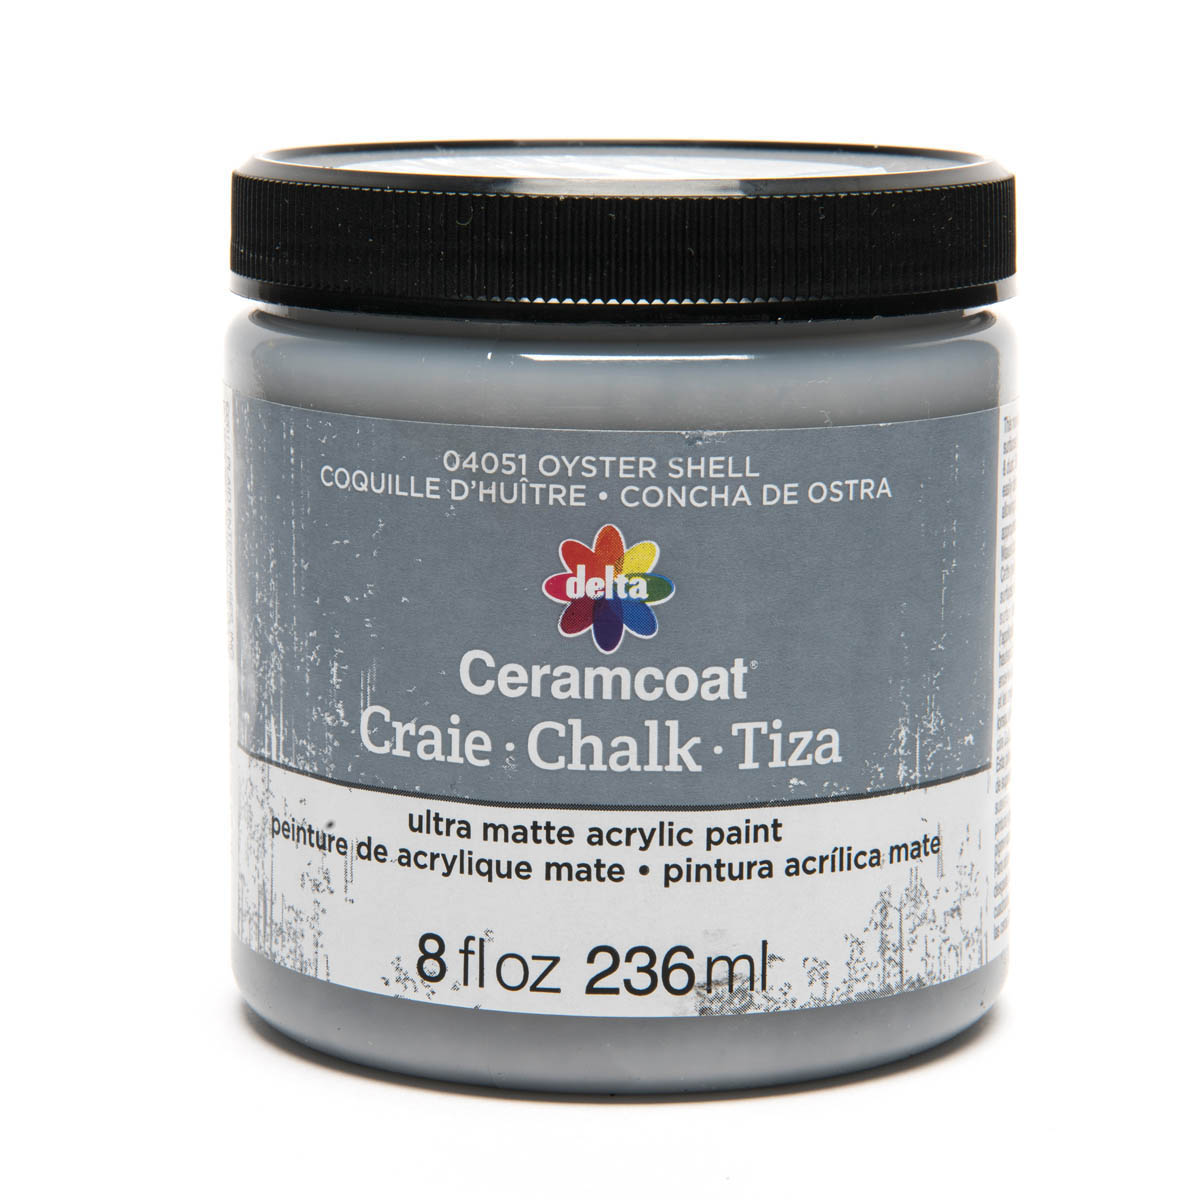 Delta Ceramcoat ® Chalk - Oyster Shell, 8 oz. - 04051